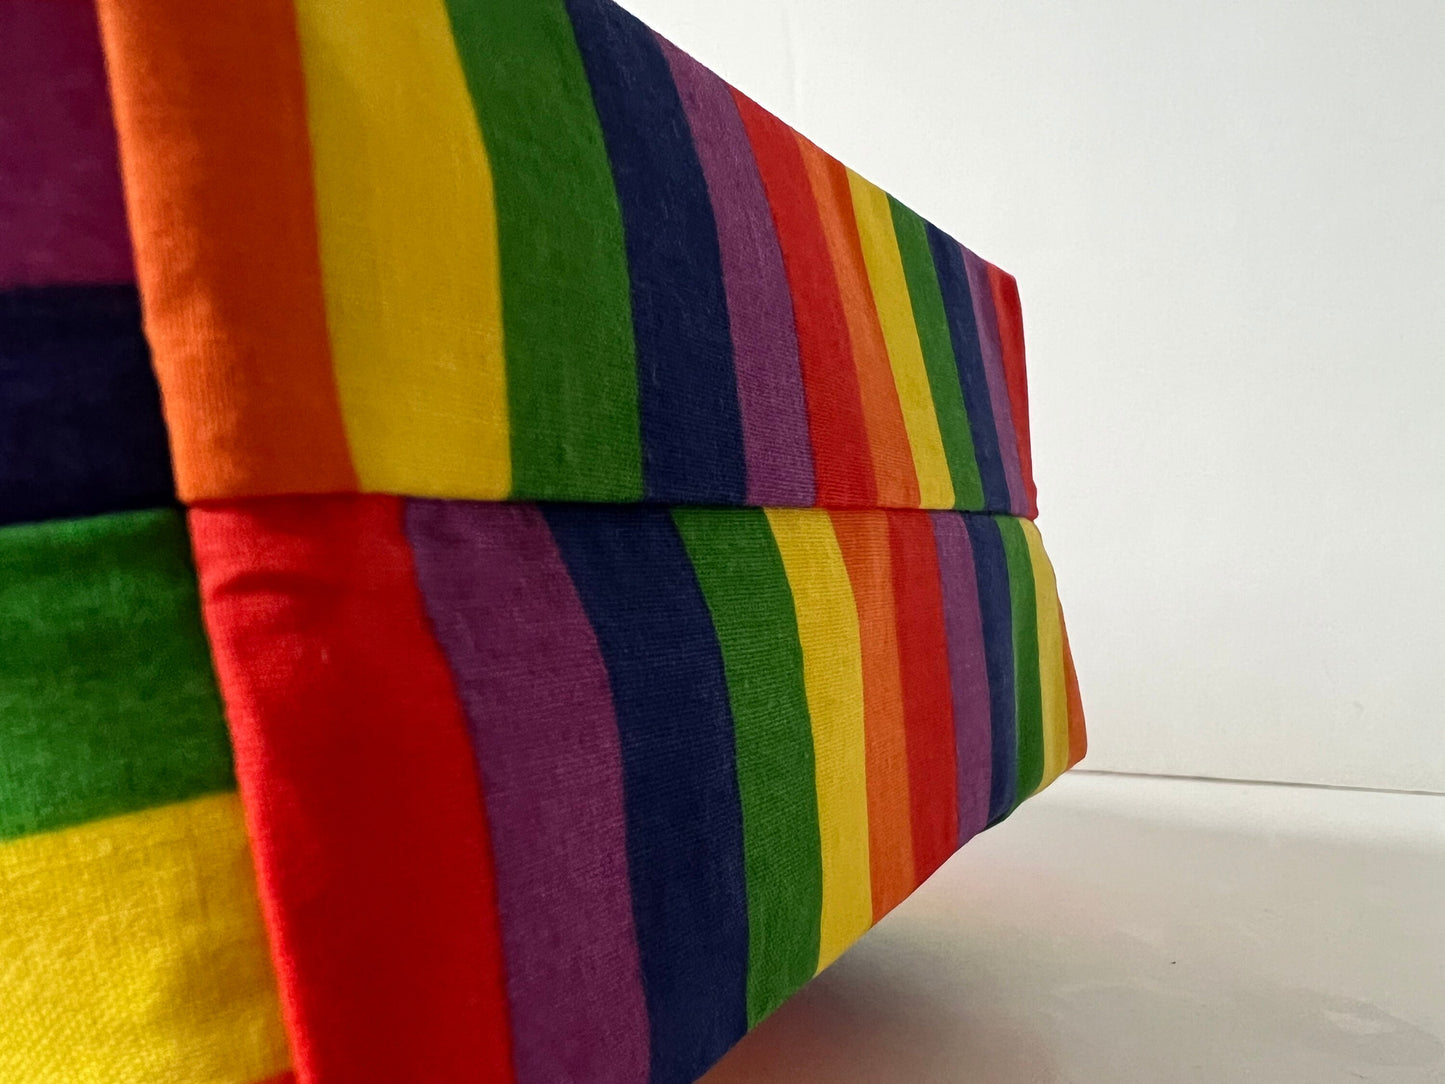 Rainbow Pride Knitting Bag - Handmade Ally Support for LGBTQ+